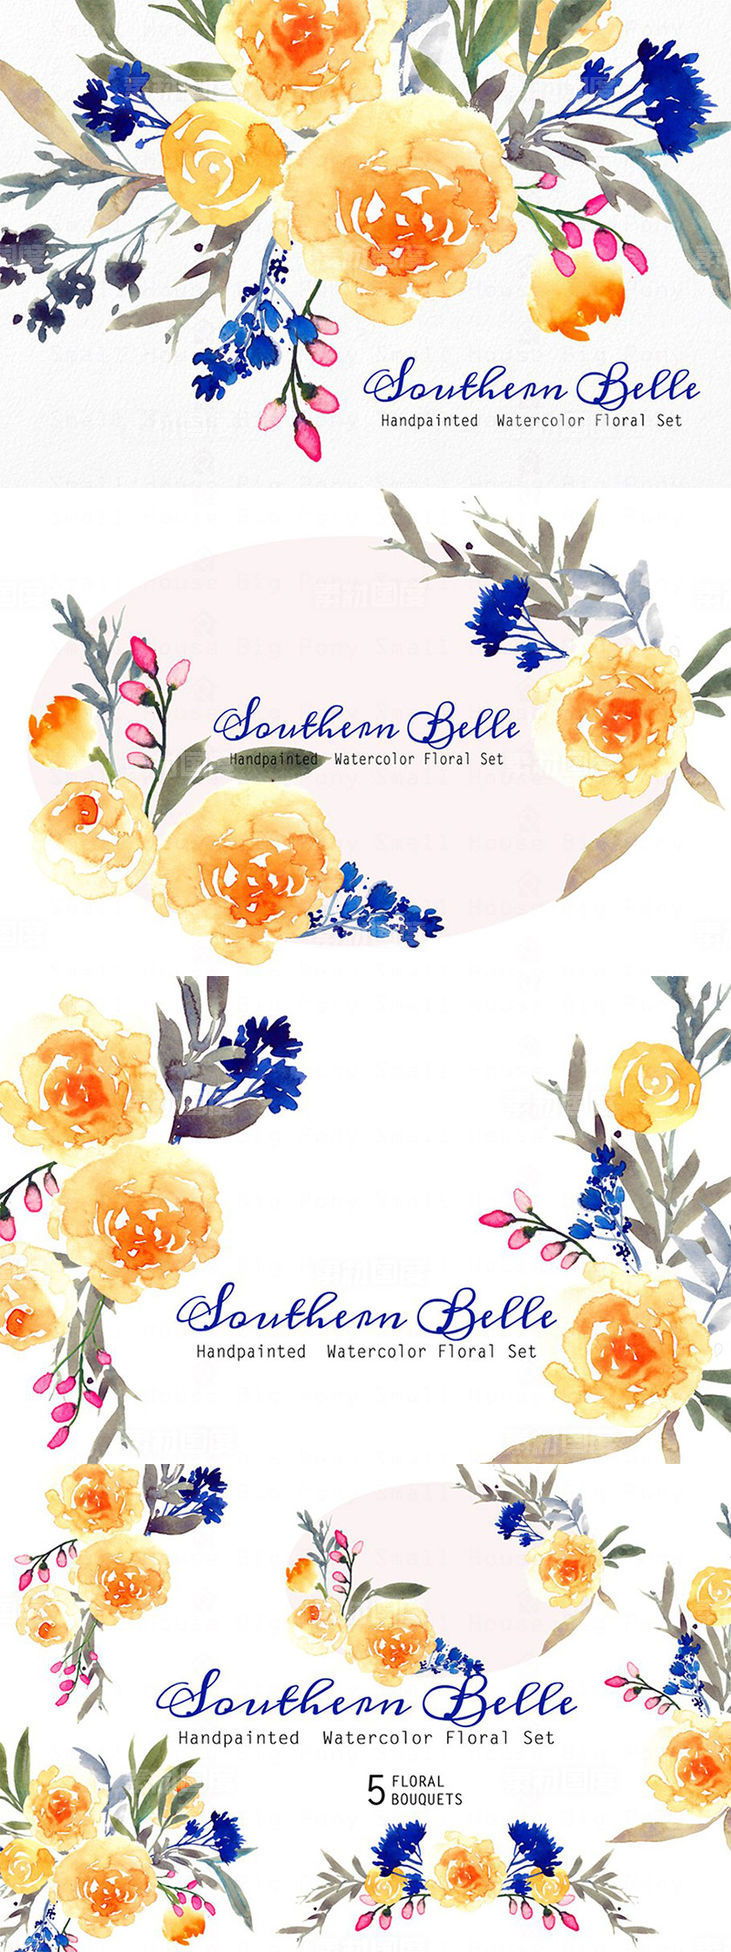 水彩手绘江南彩色花卉插画 Southern Belle ndash Watercolor Floral S